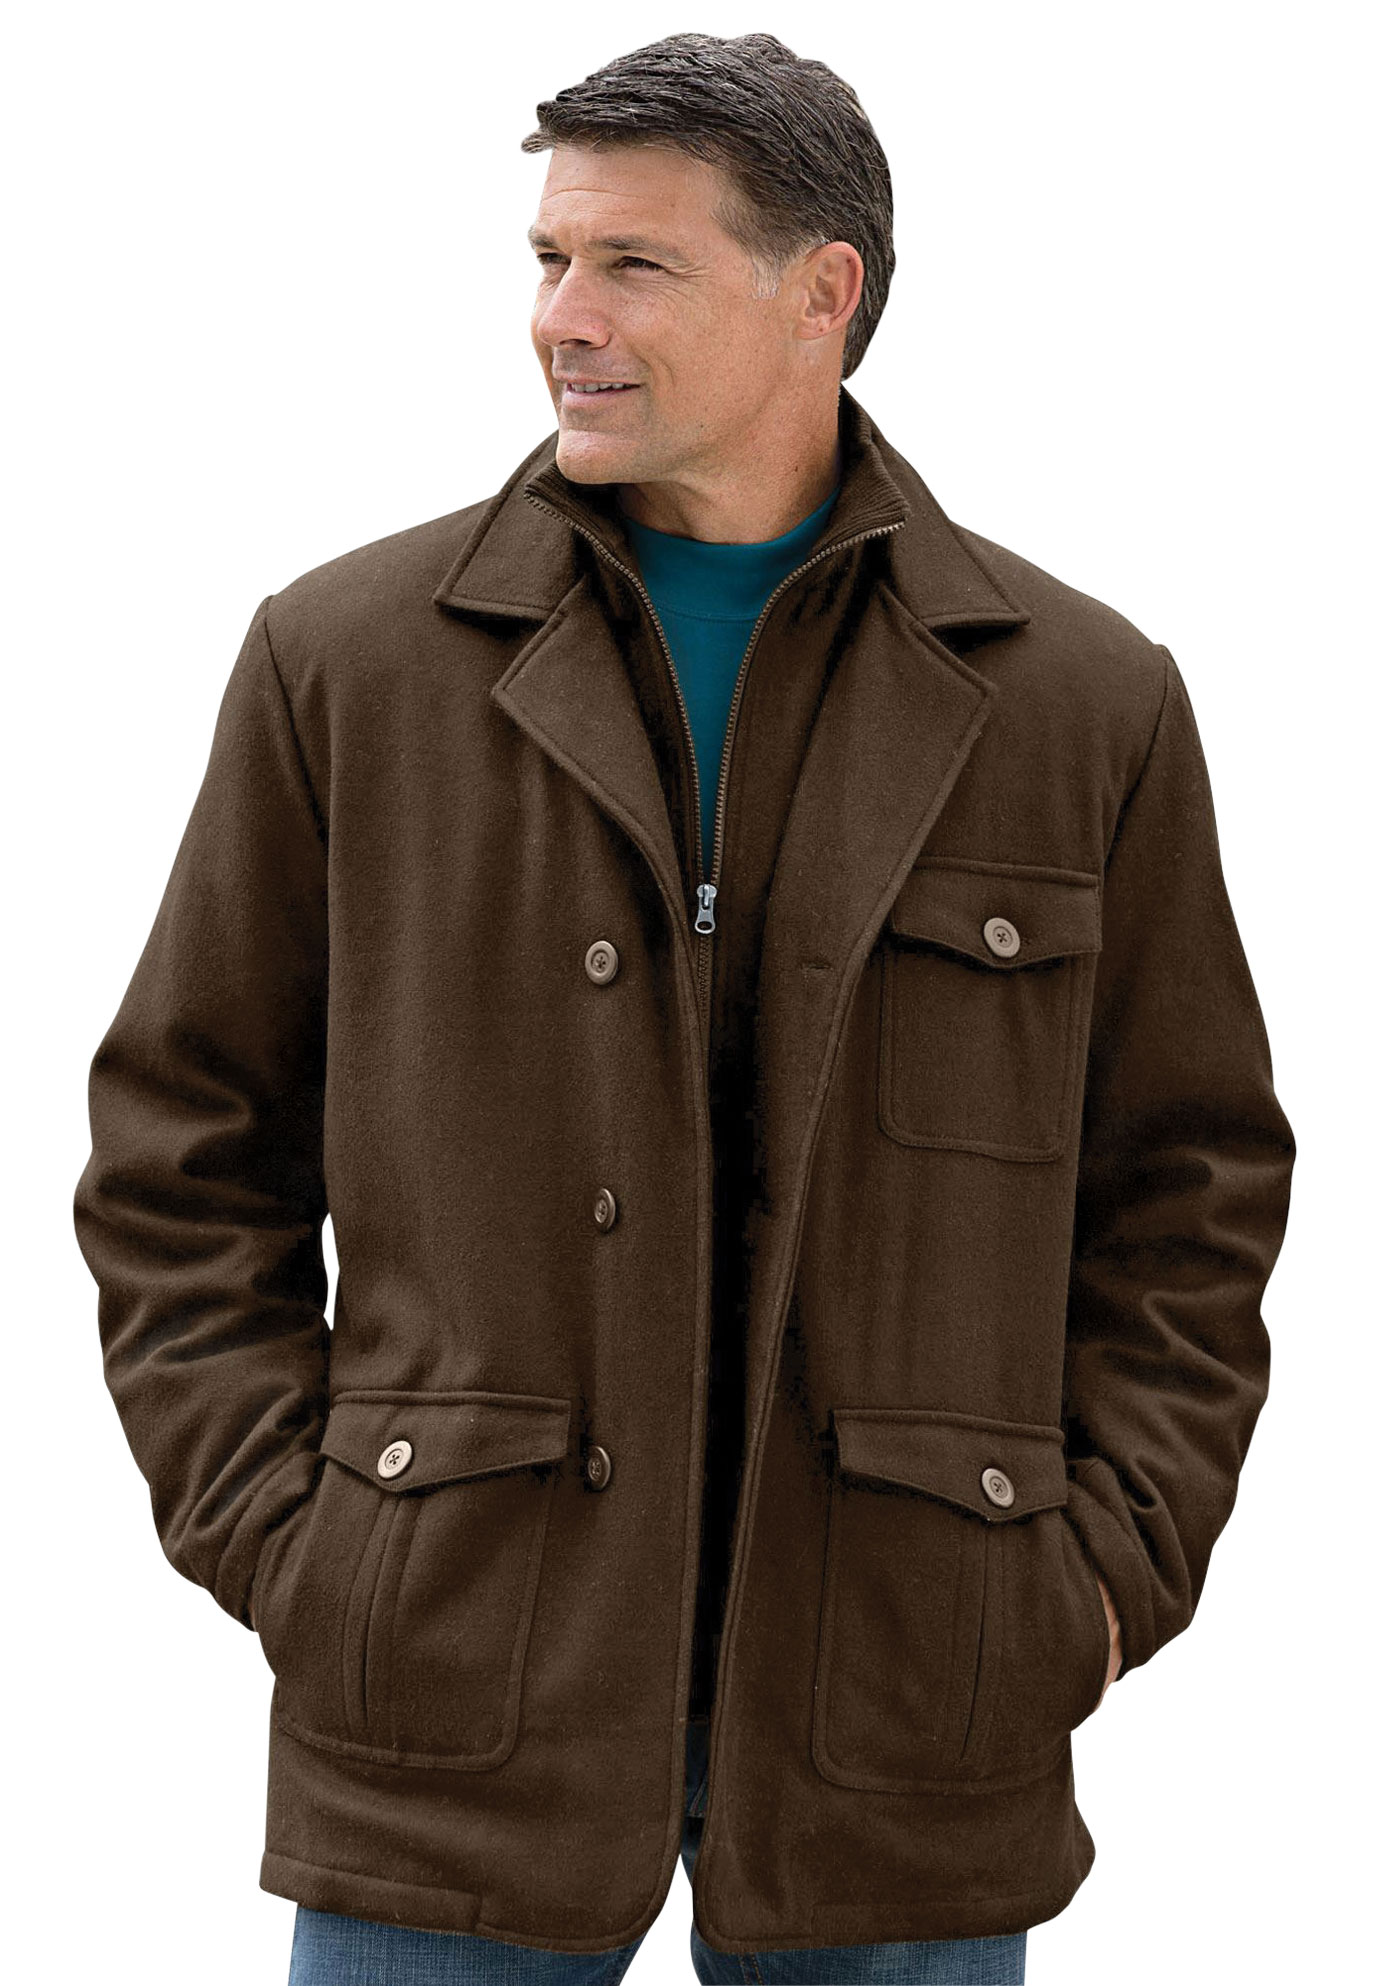 Kingsize Men's Big & Tall Multi-Pocket Inset Jacket Coat - image 5 of 5